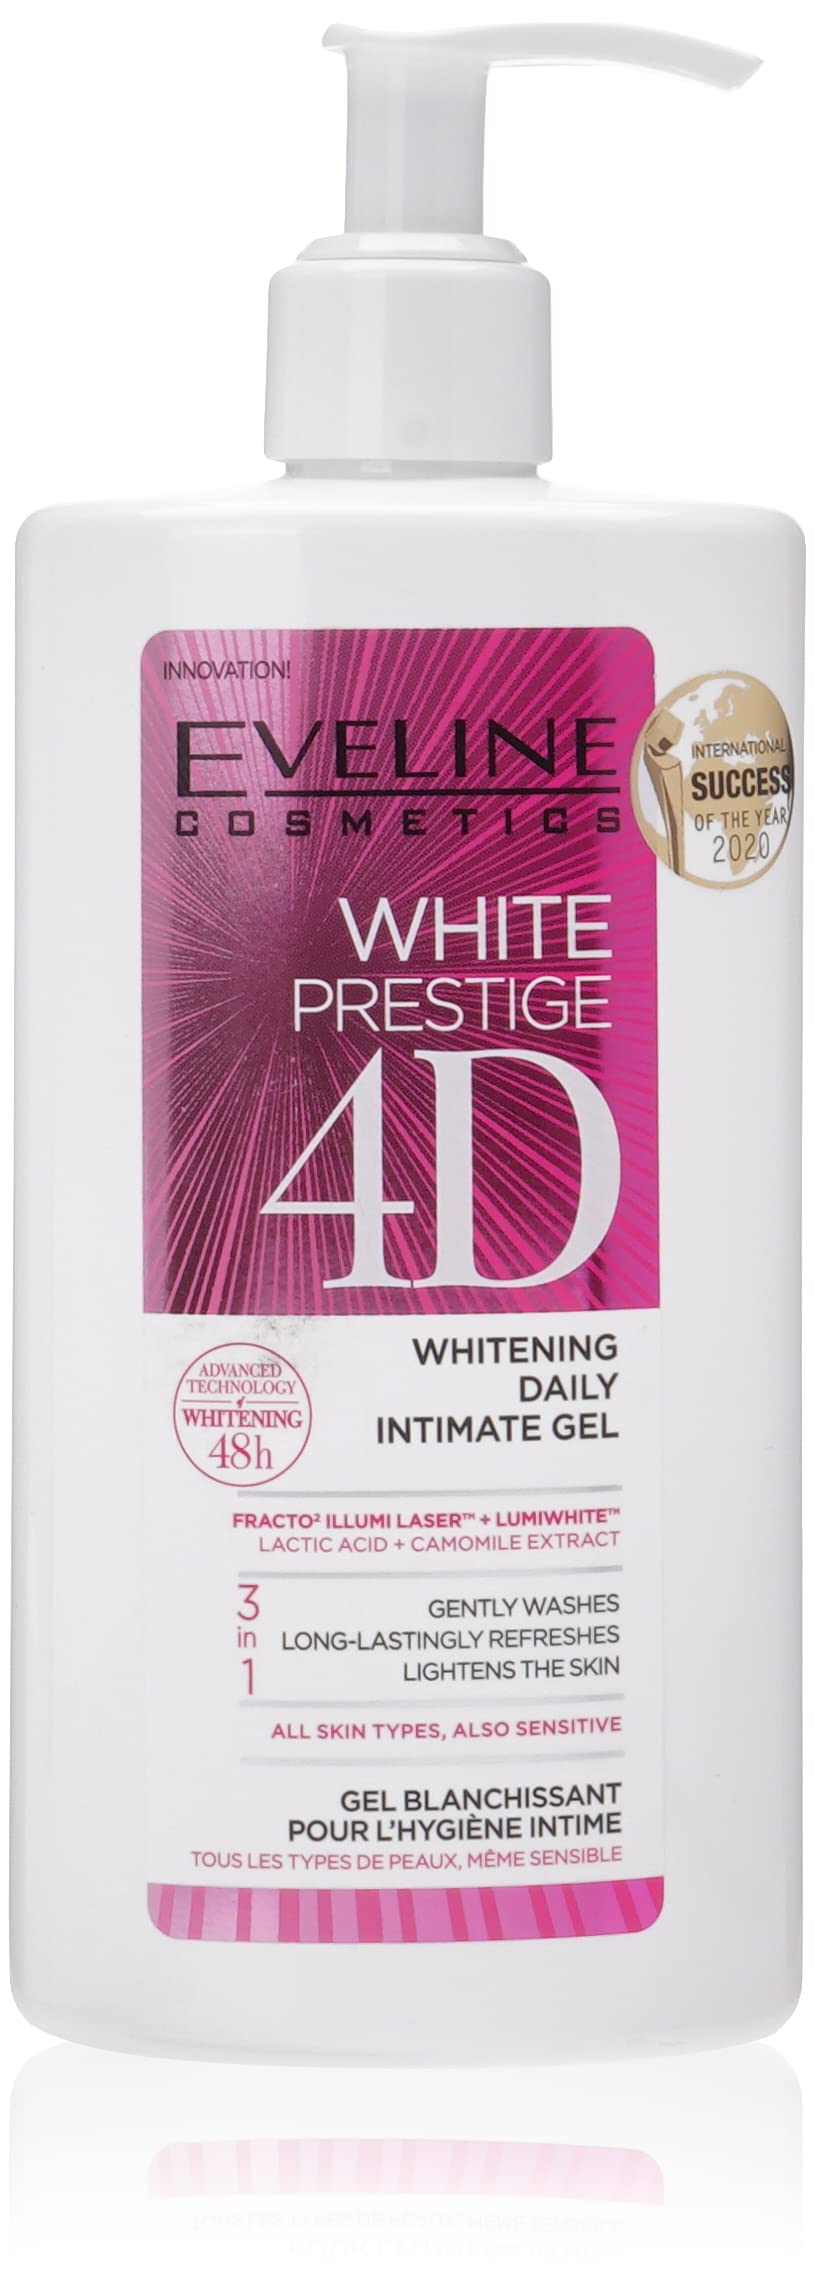 White Prestige 4D Daily Intimate Gel